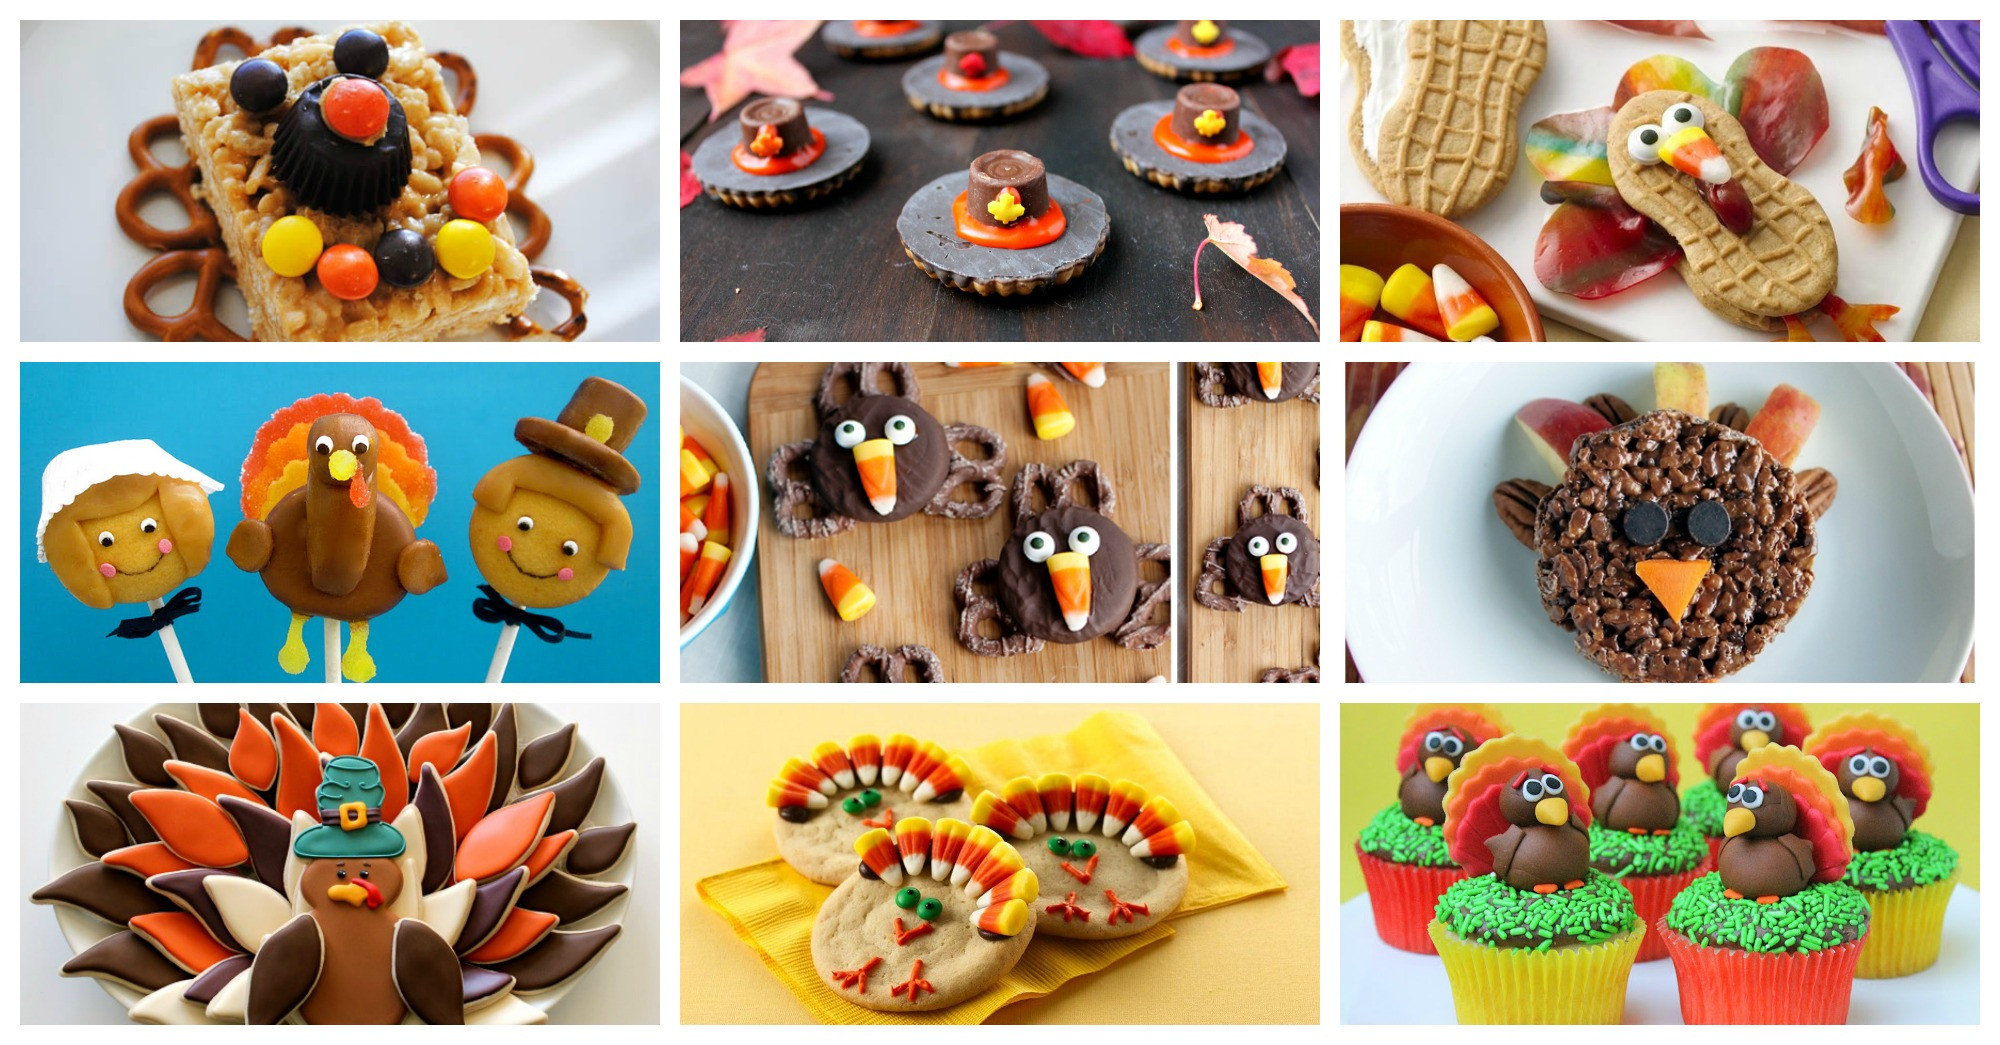 Kids Thanksgiving Desserts
 17 Fun and Yummy Thanksgiving Desserts Your Kids Will Love